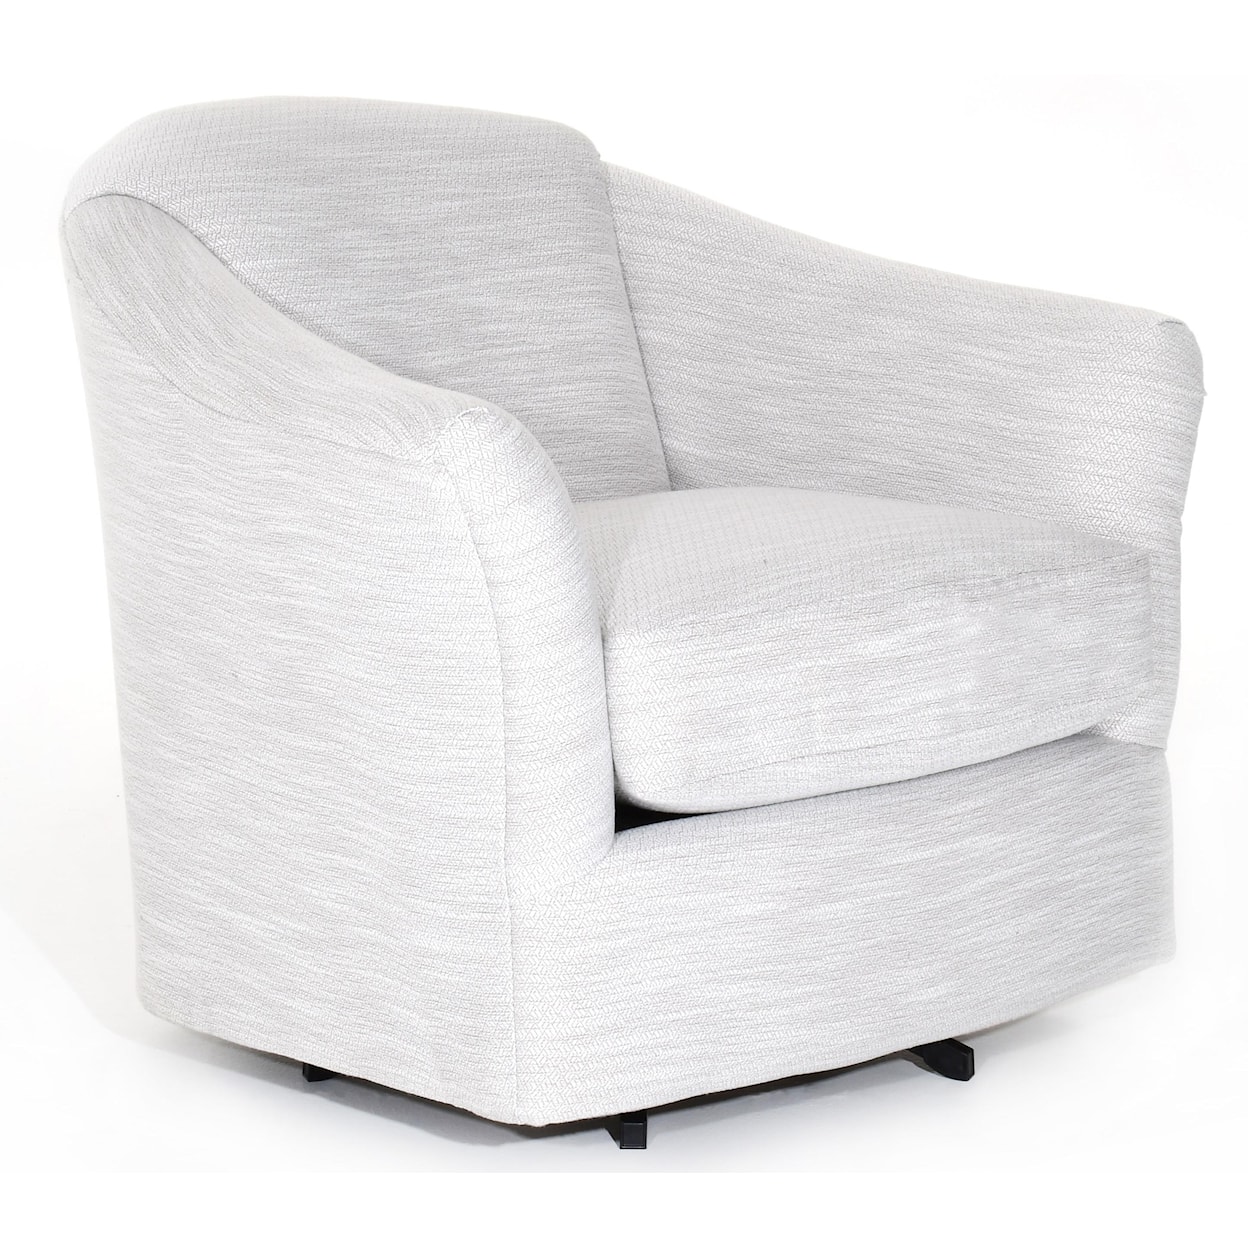 Best Home Furnishings Darby Swivel Chair